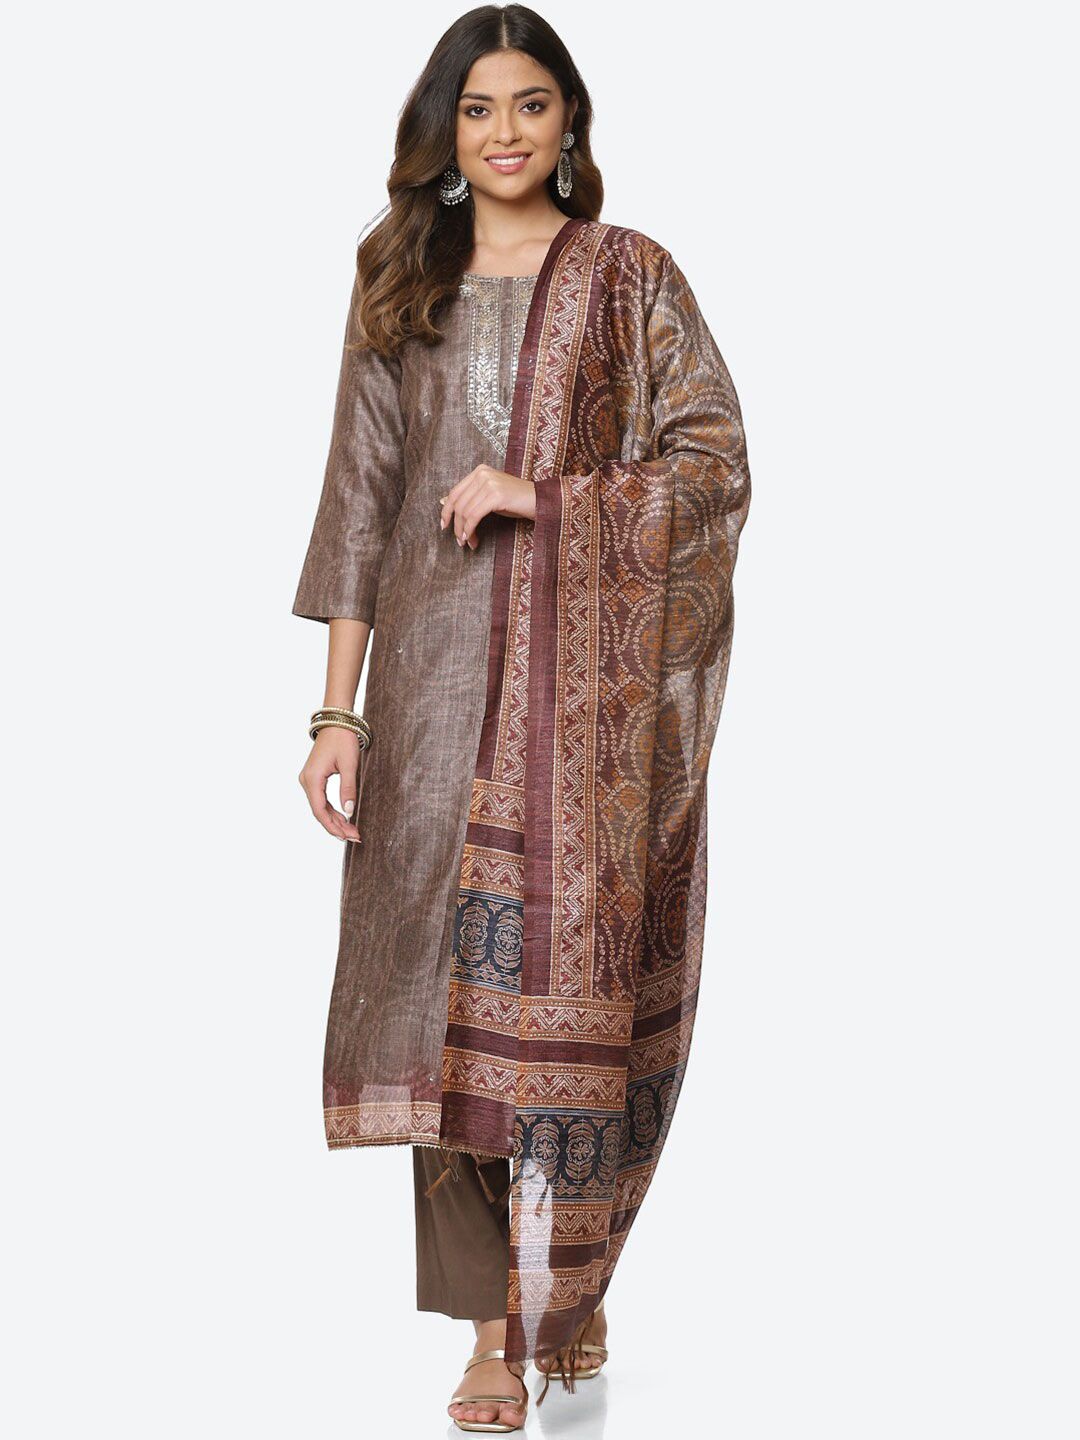 Meena Bazaar Brown & Blue Printed Unstitched Dress Material Price in India